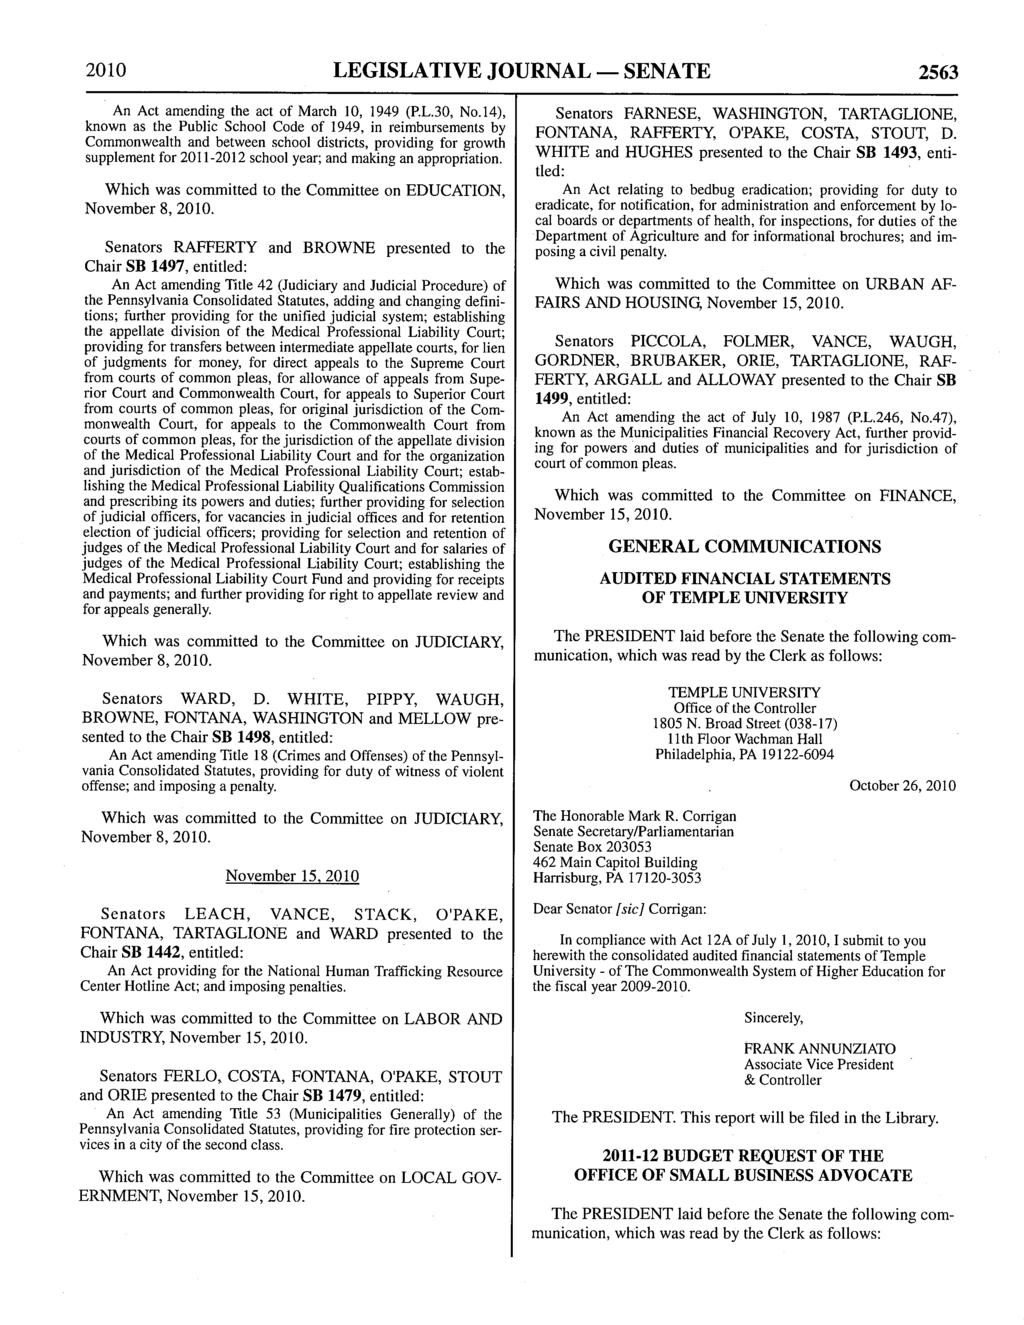 2010 LEGISLATIVE JOURNAL - SENATE 2563 An Act amending the act of March 10, 1949 (P.L.30, No.